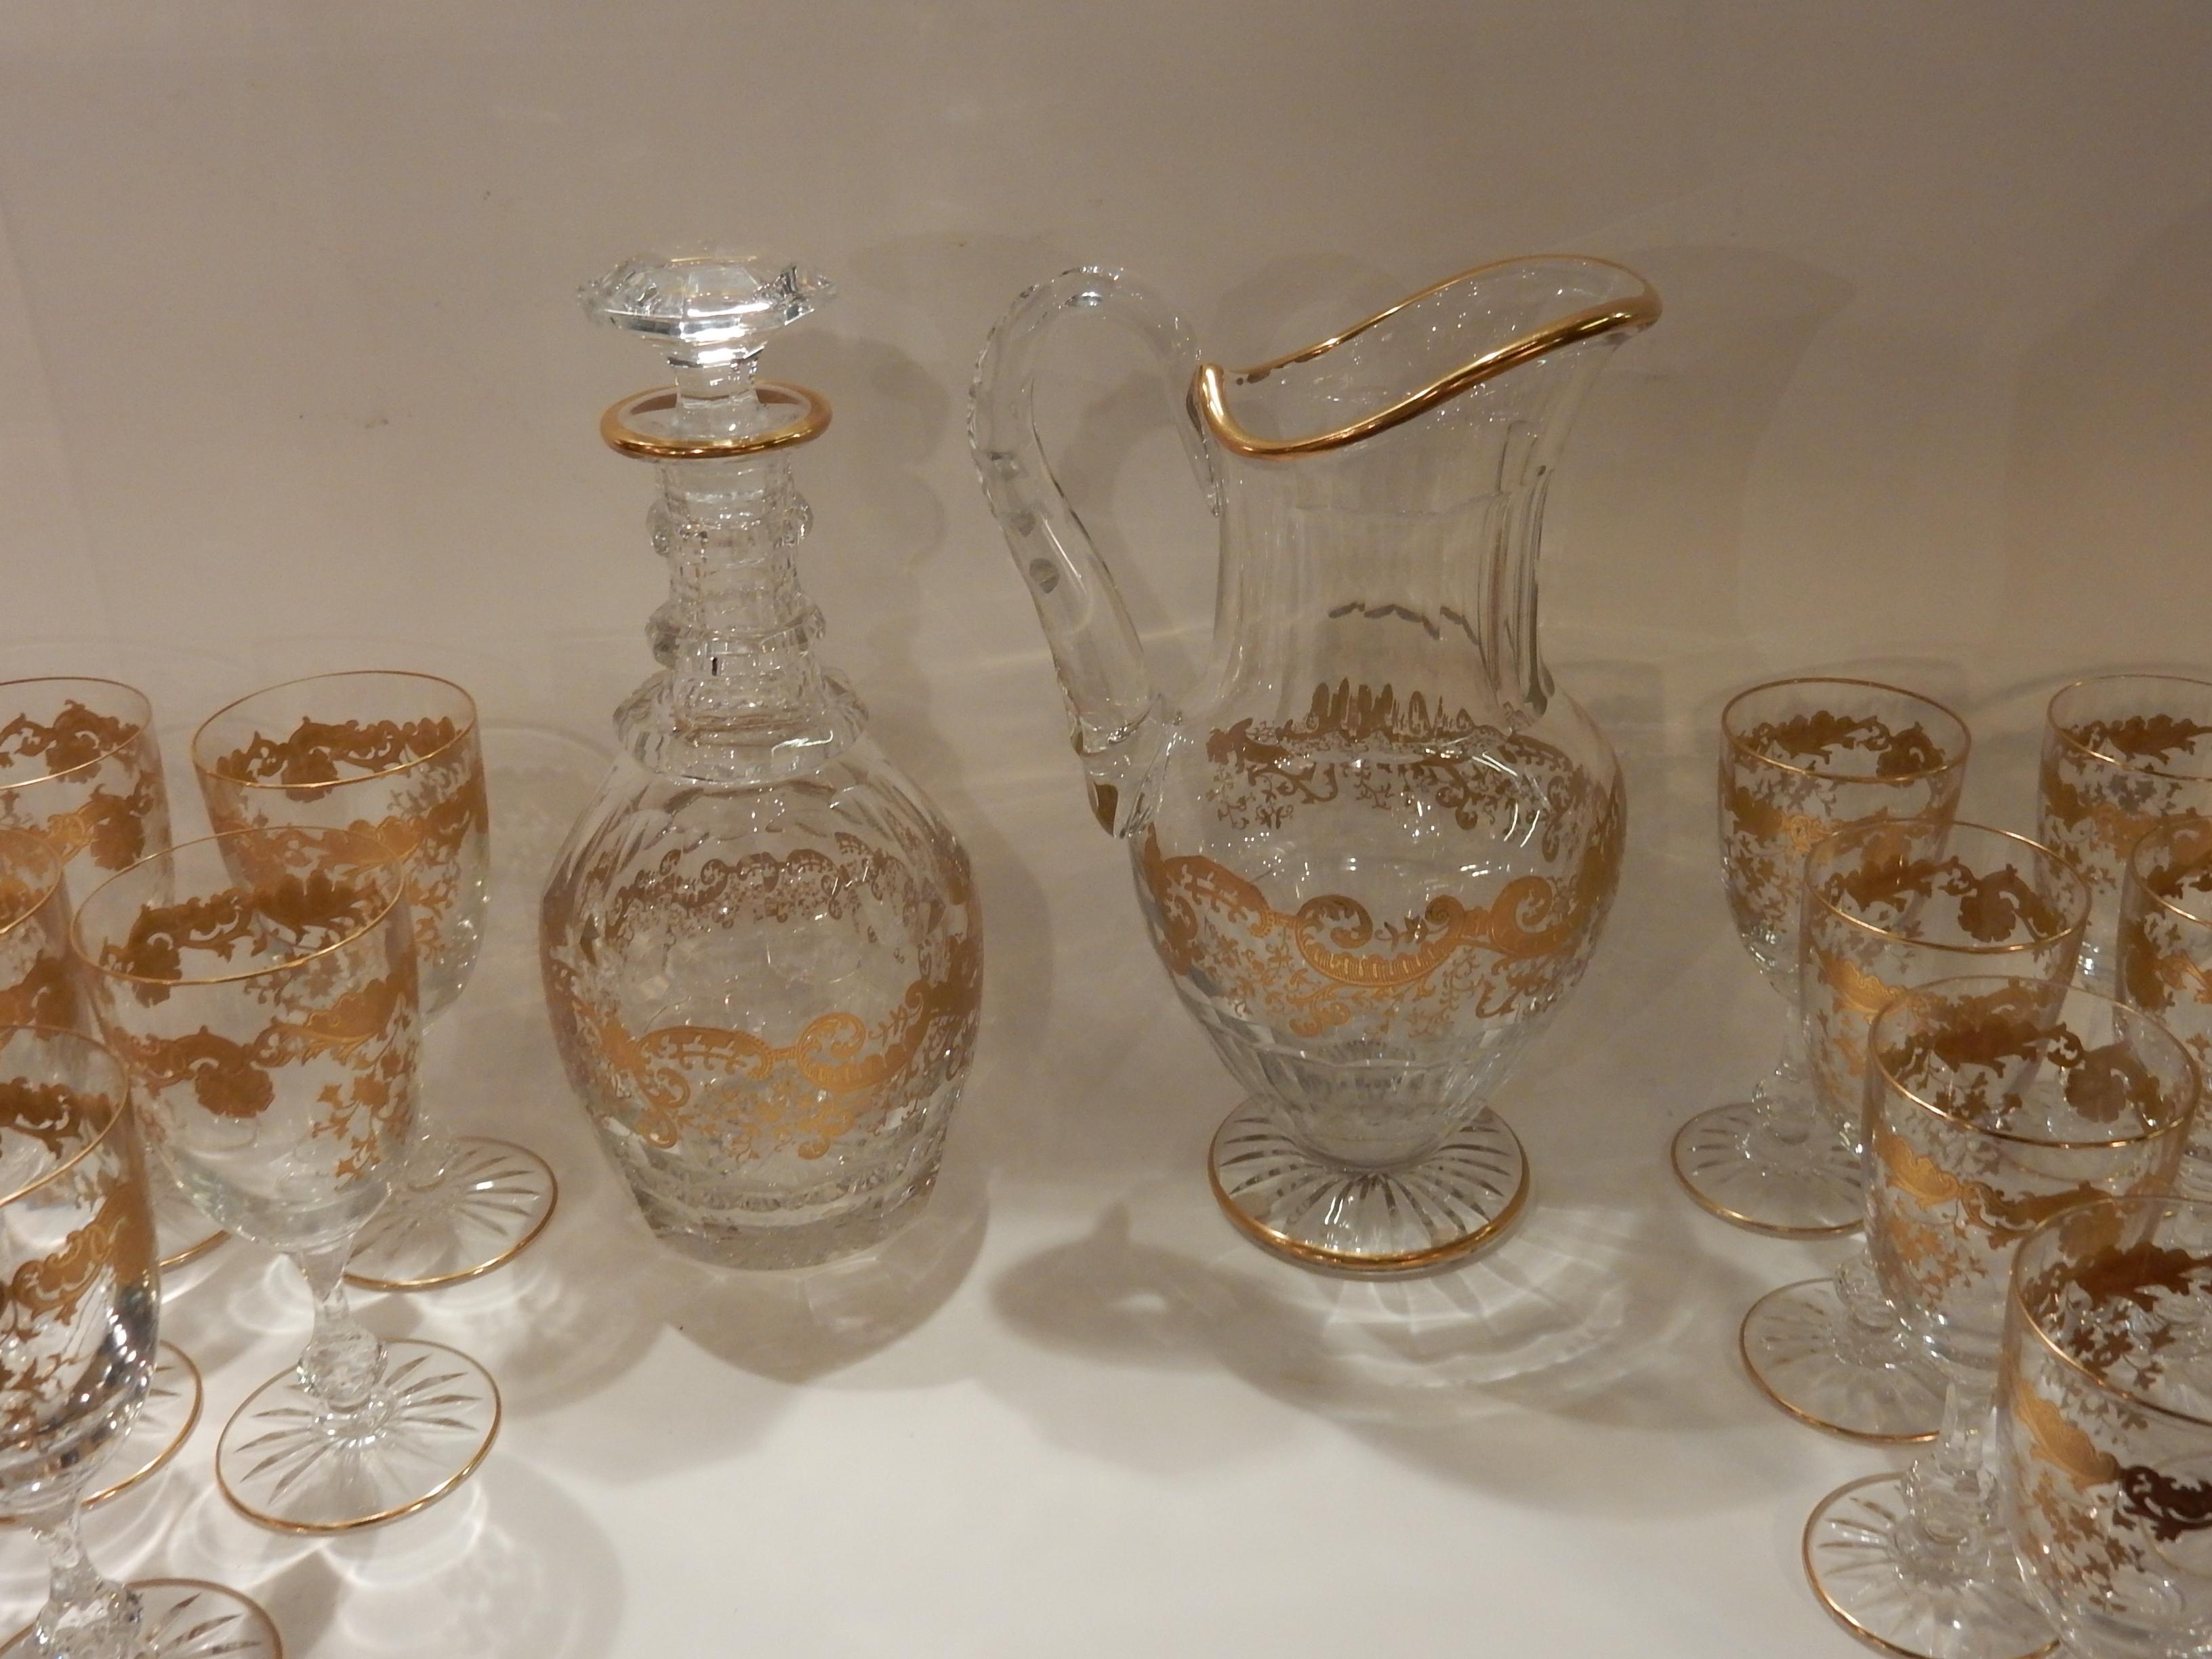 Crystal serveware:
1 carafe H 28 cm
1 water jug H 27 cm
8 water glasses H 16 cm
12 wine glasses H 14.5cm
Model decor Trianon
Good condition.